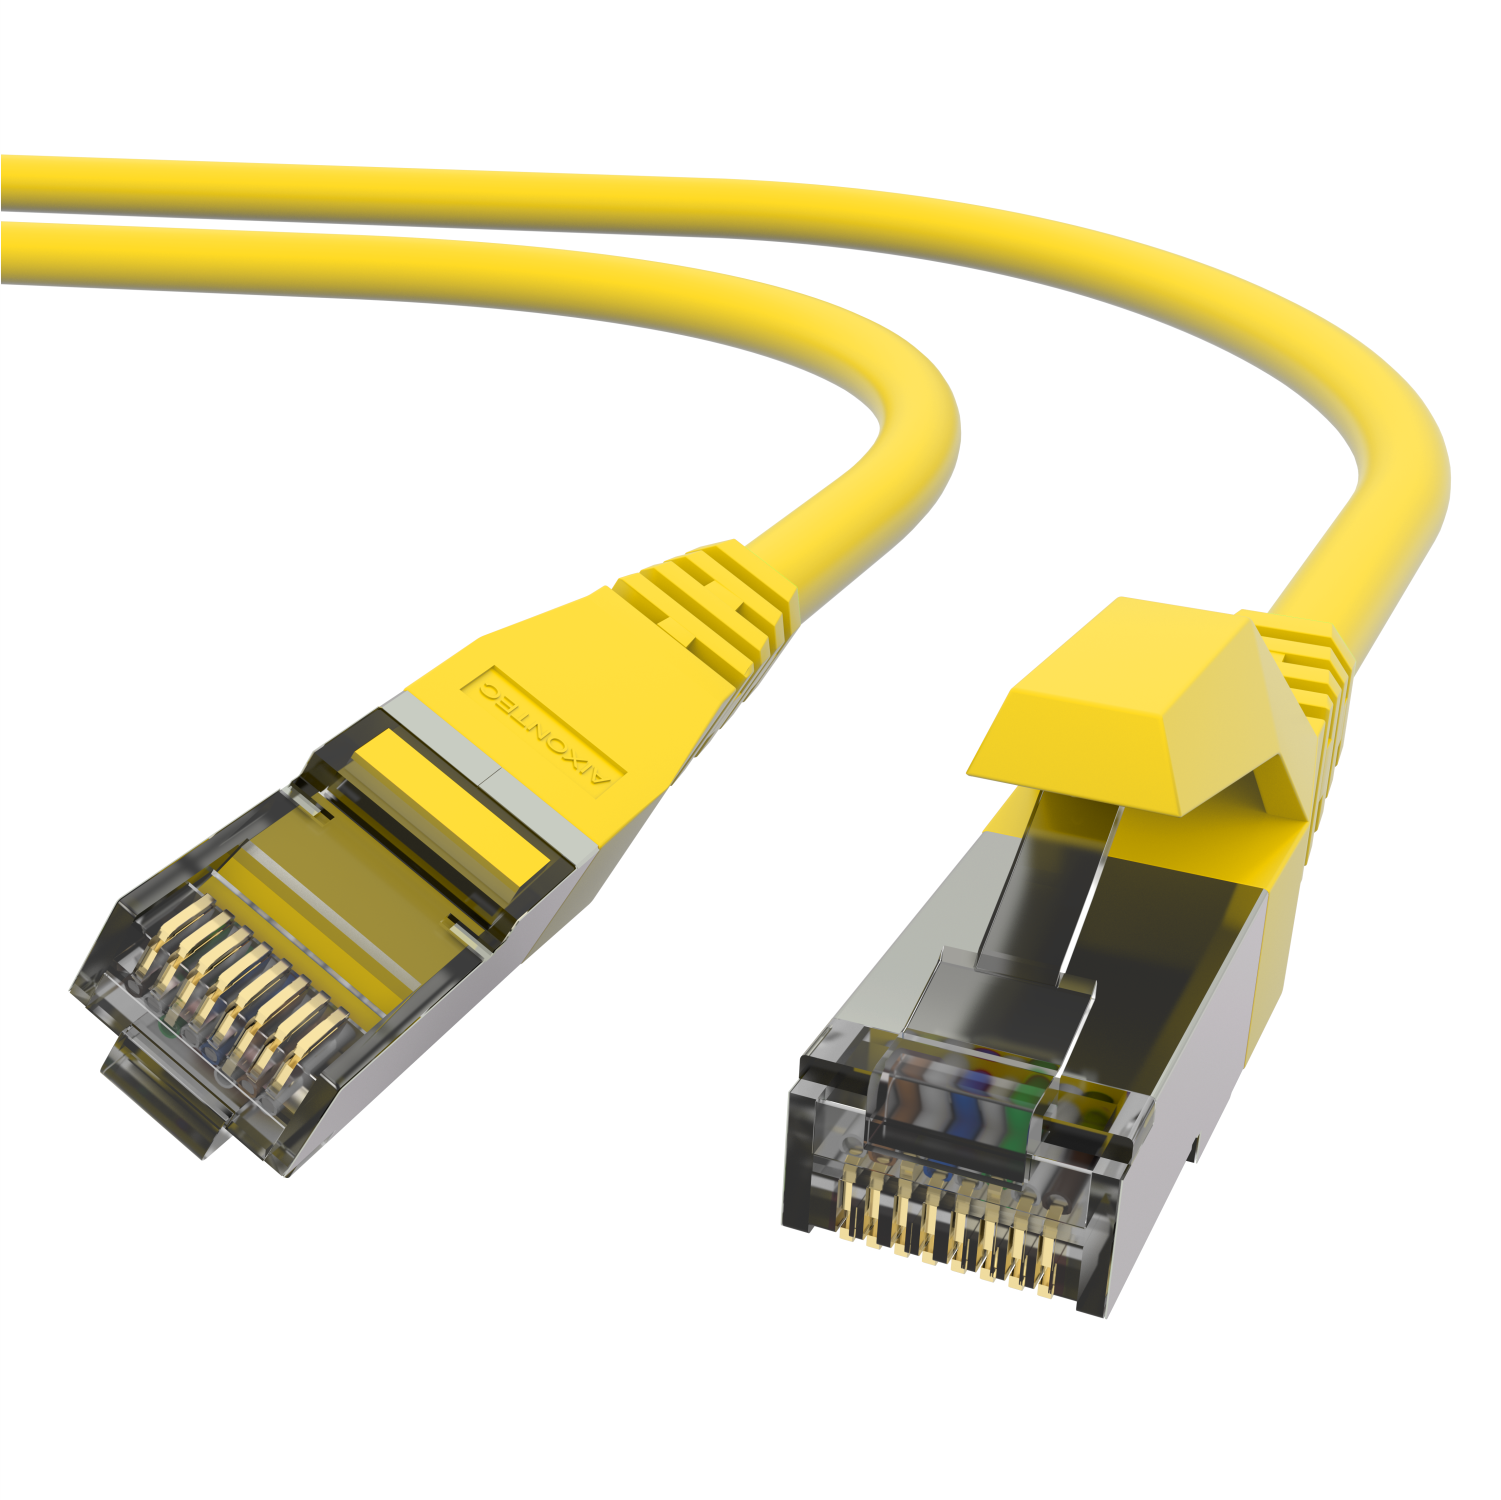 Ethernetkabel Gigabit, RJ45 0,5m Cat.6 Lankabel 10 0,5 m Netzwerkkabel, 2x AIXONTEC Patchkabel